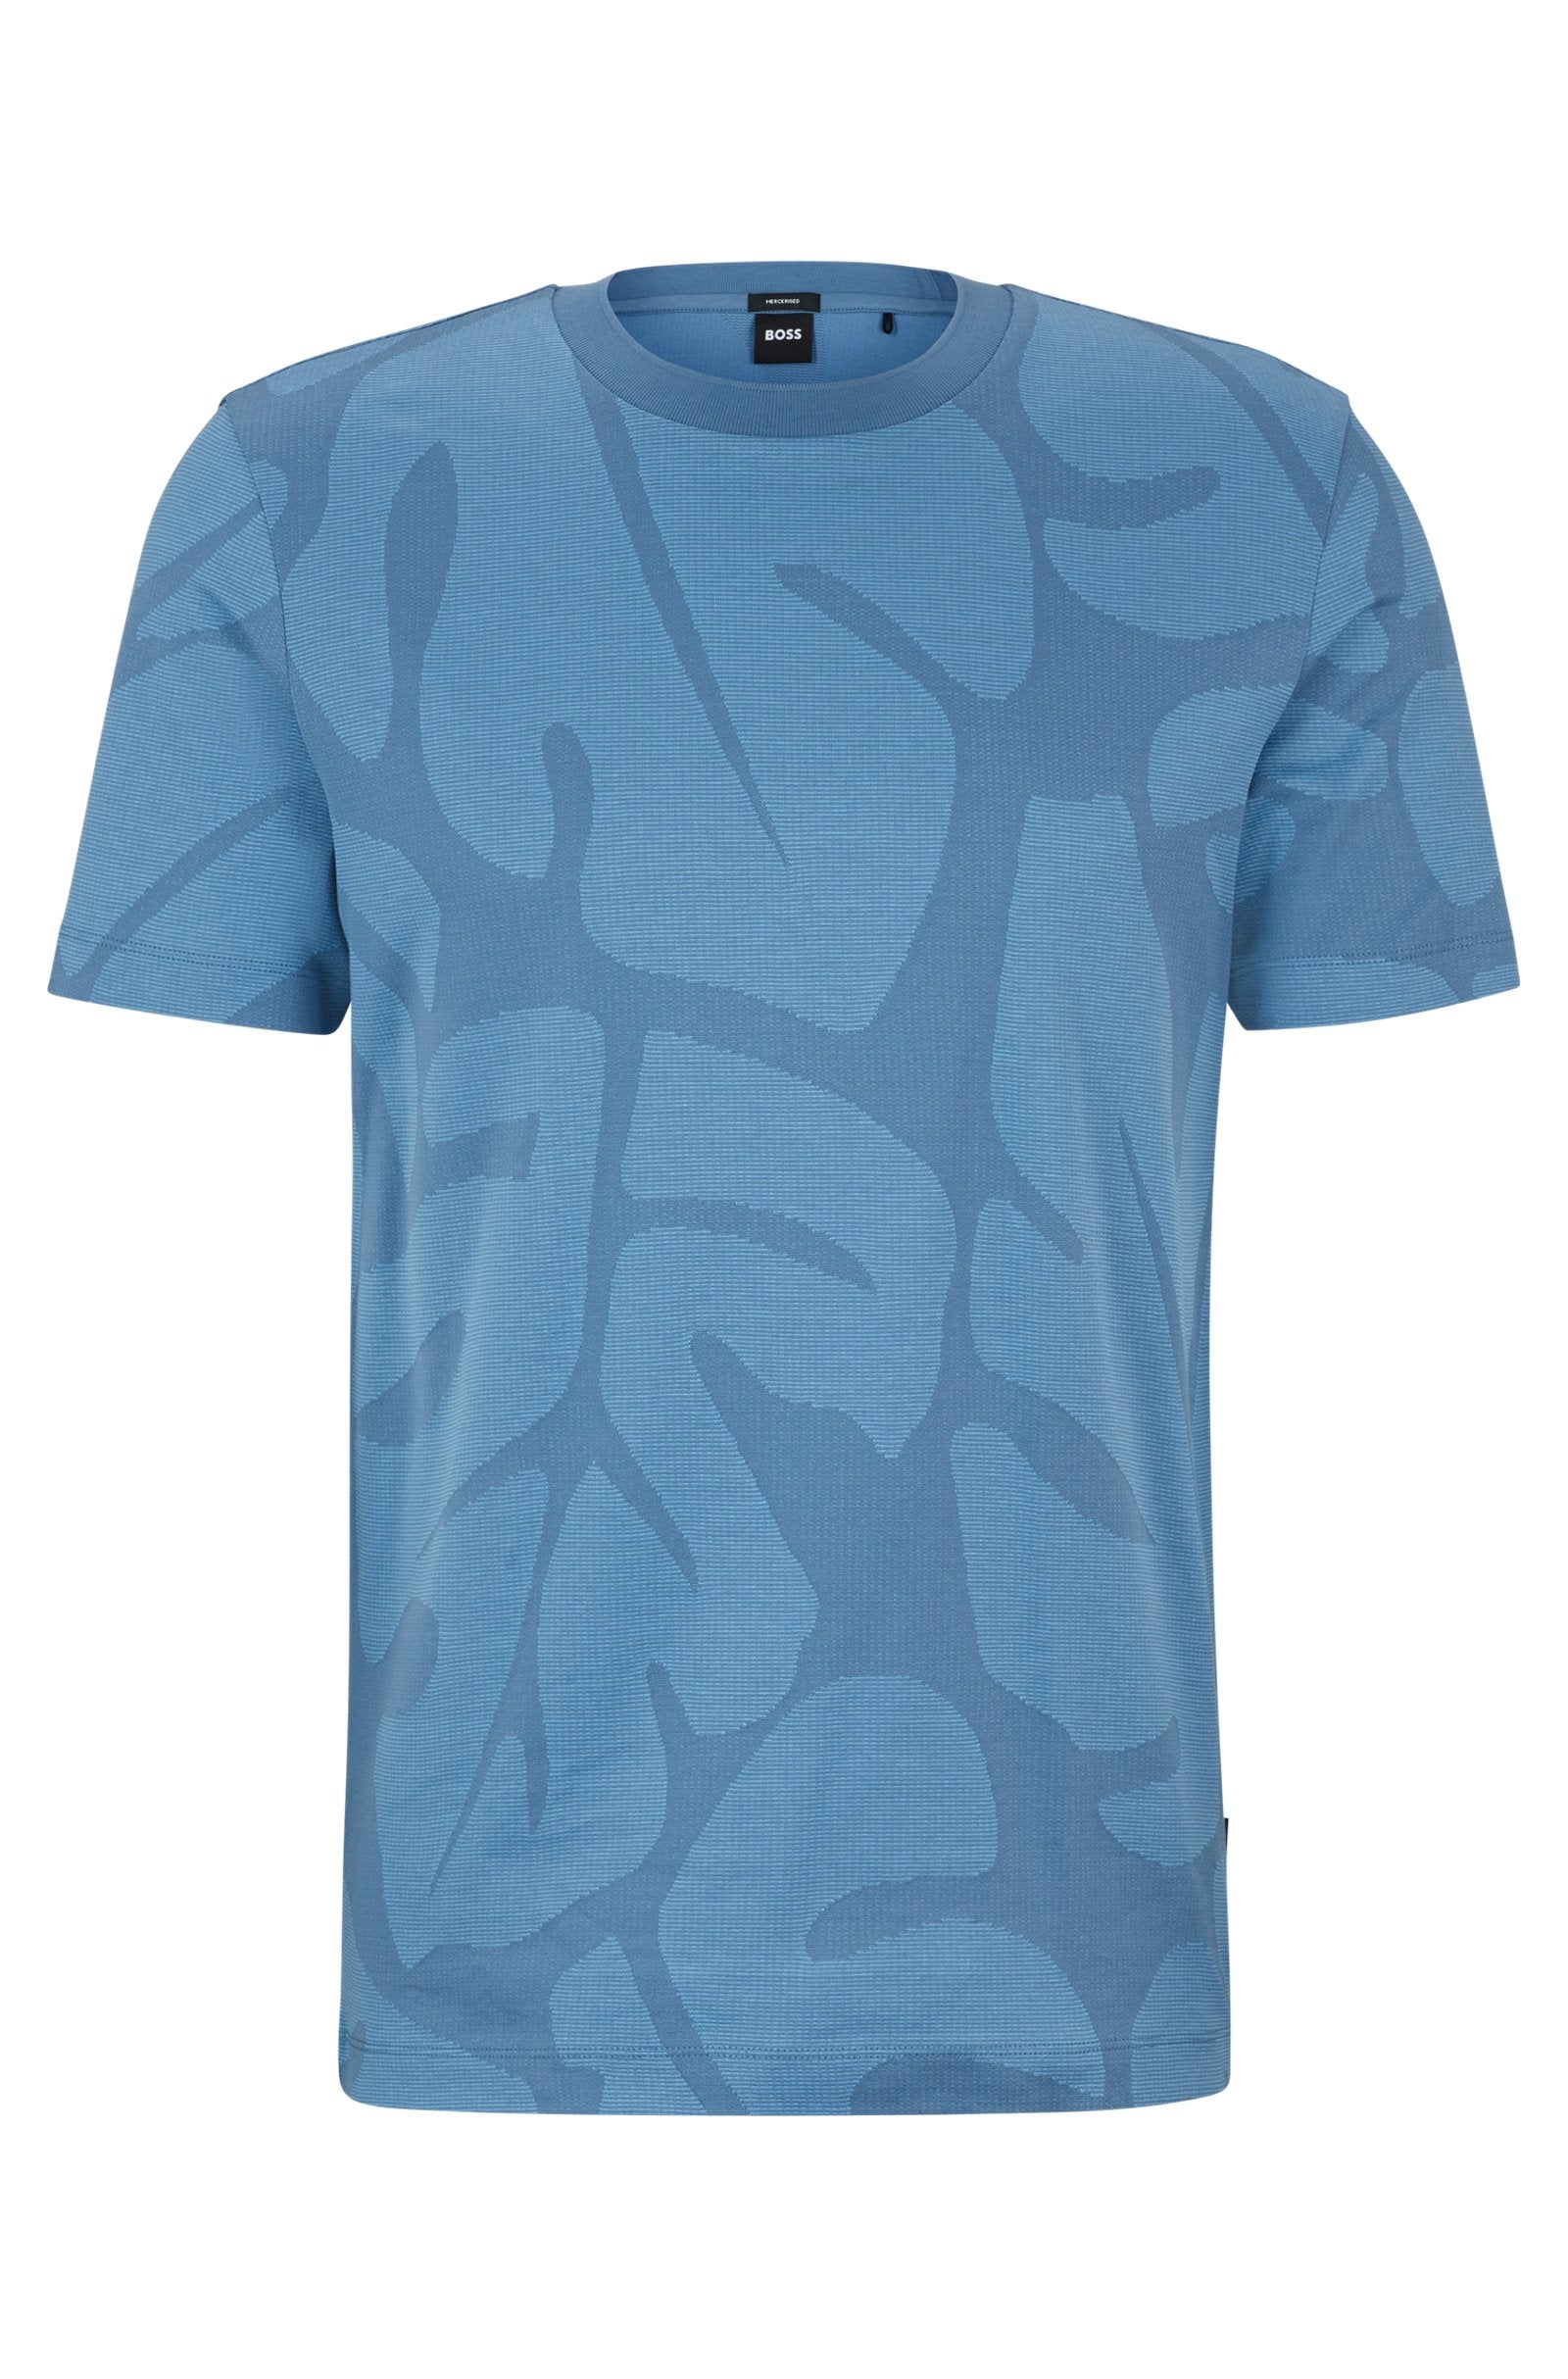 BOSS - THOMPSON 08 Cotton 2-Tone Monstera Leaf Print T-Shirt in Light Blue 50511843 459